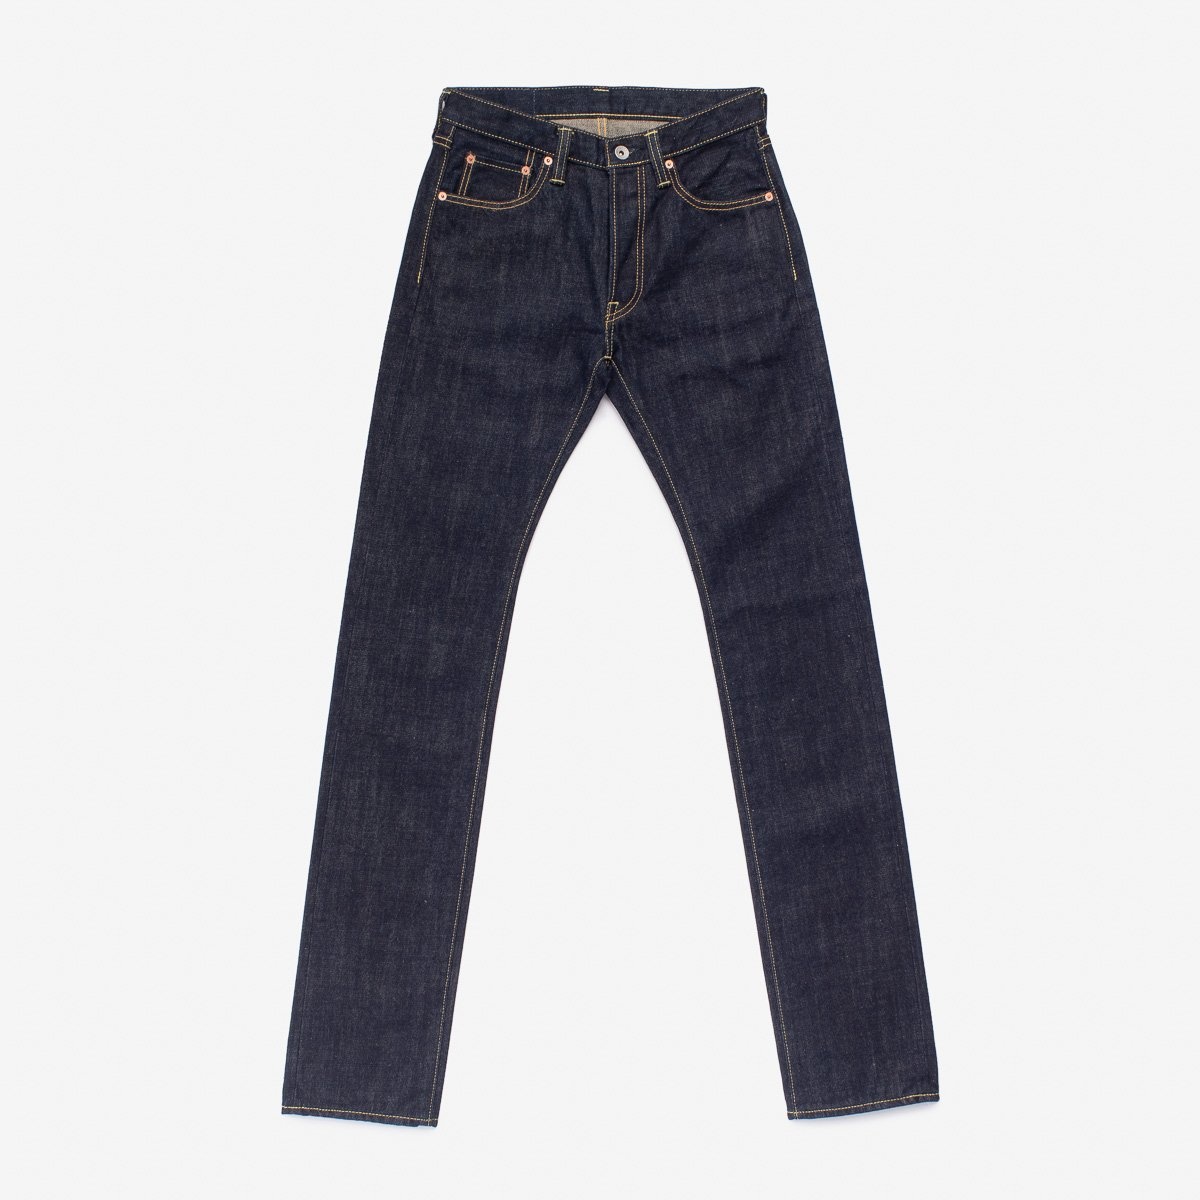 IH-555N 17oz Selvedge Denim Super Slim Cut Jeans - Natural Indigo - 1